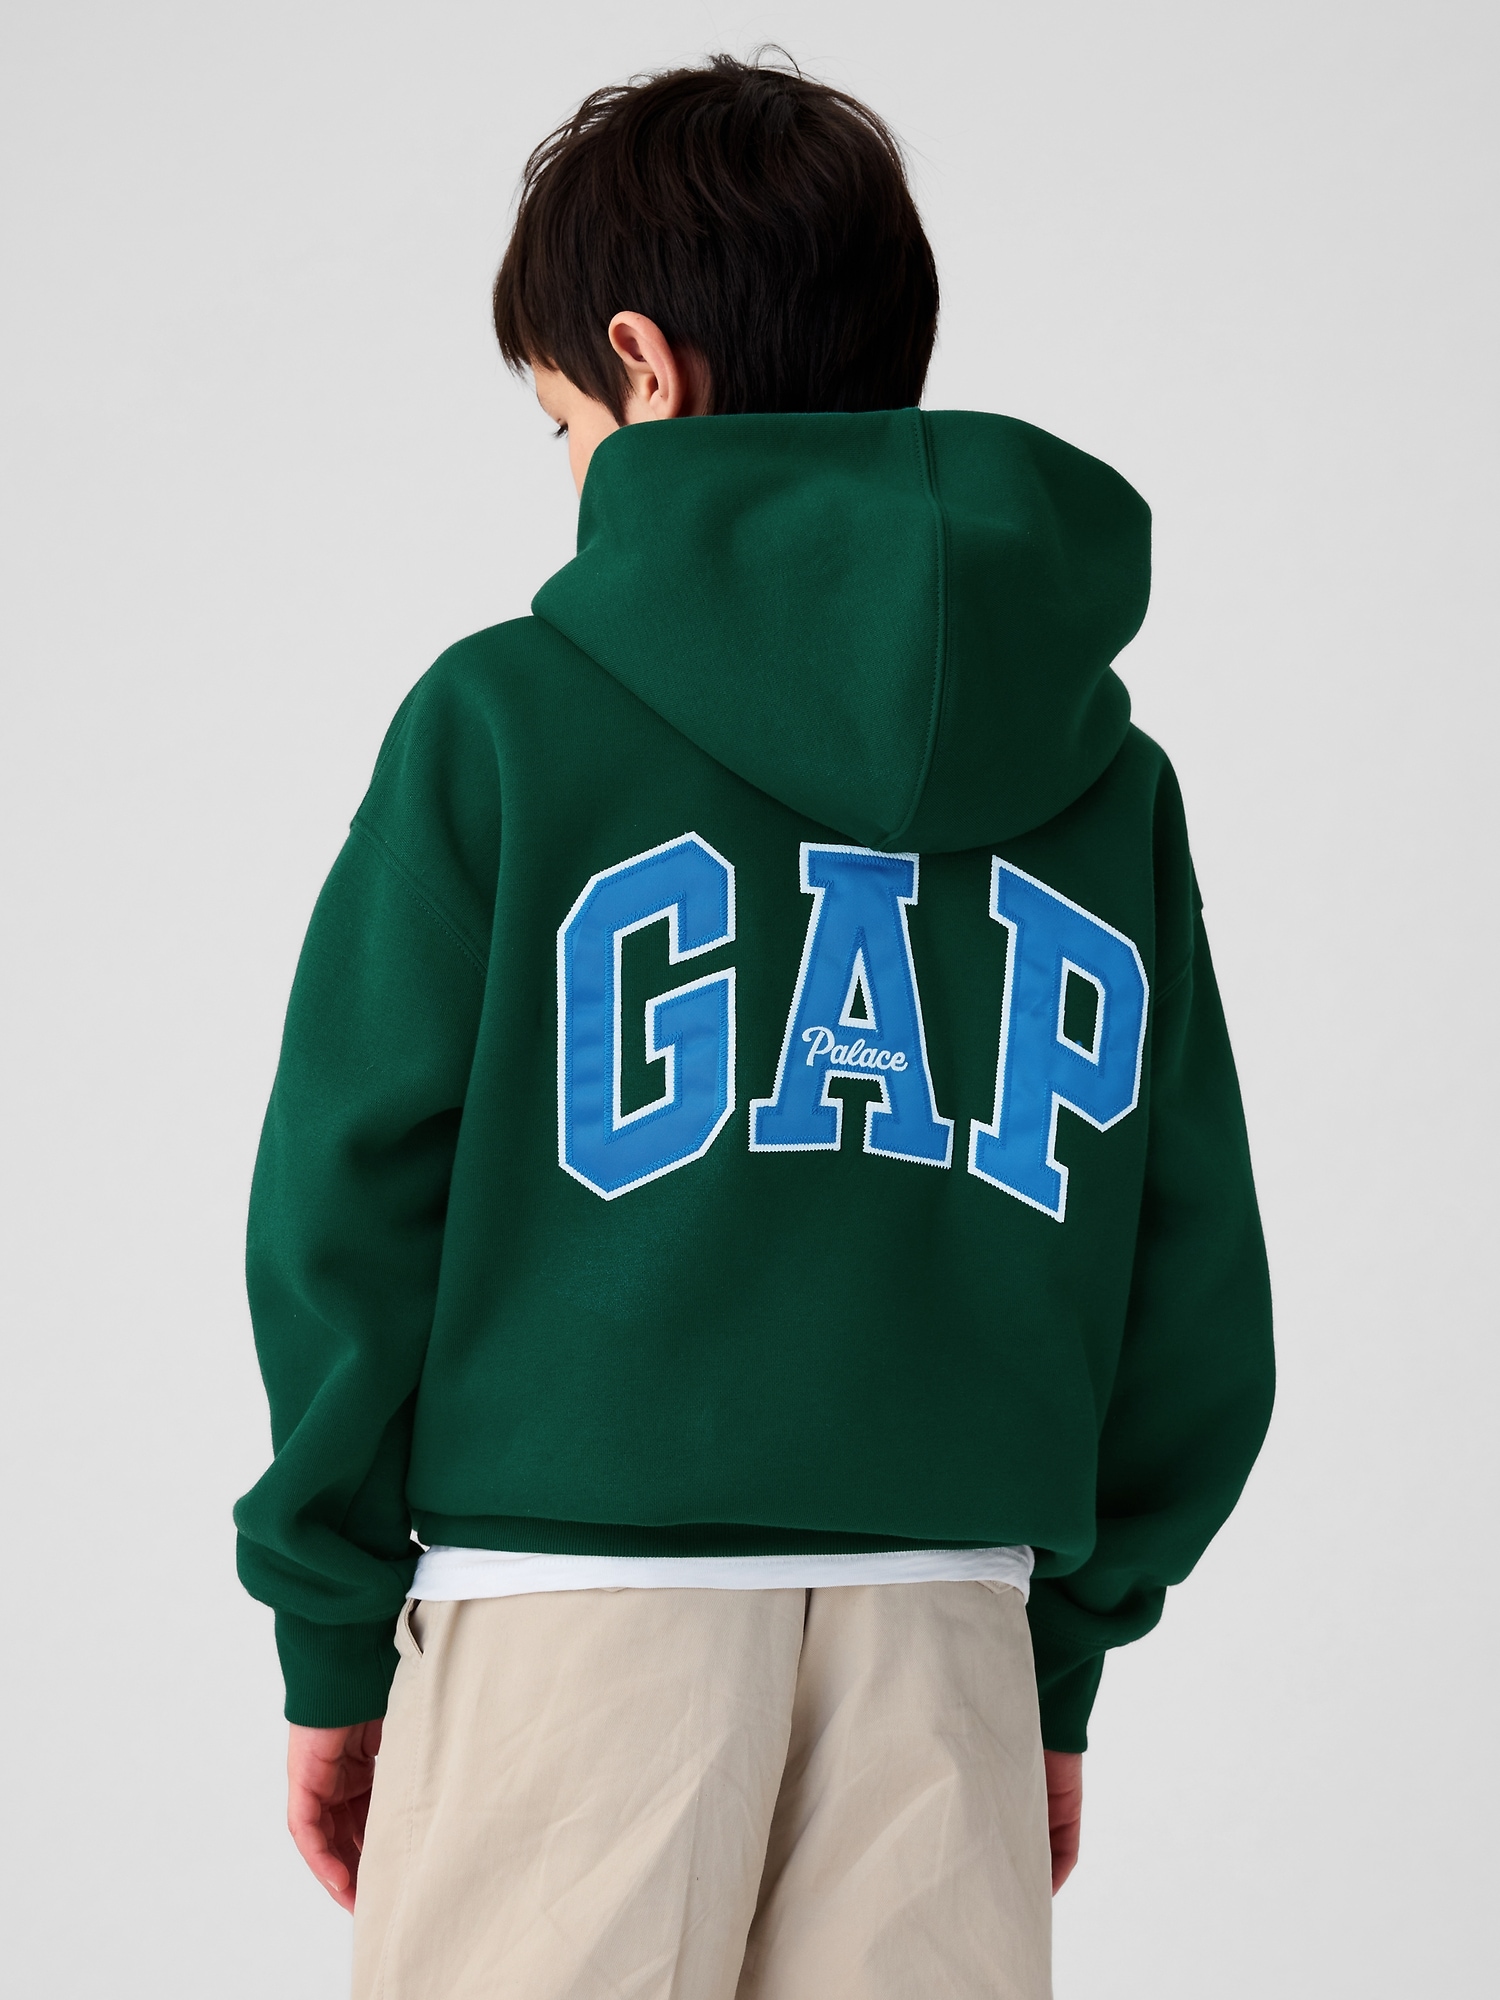 PALACE x Gap Kids Hood Rain Forest パーカー - トップス